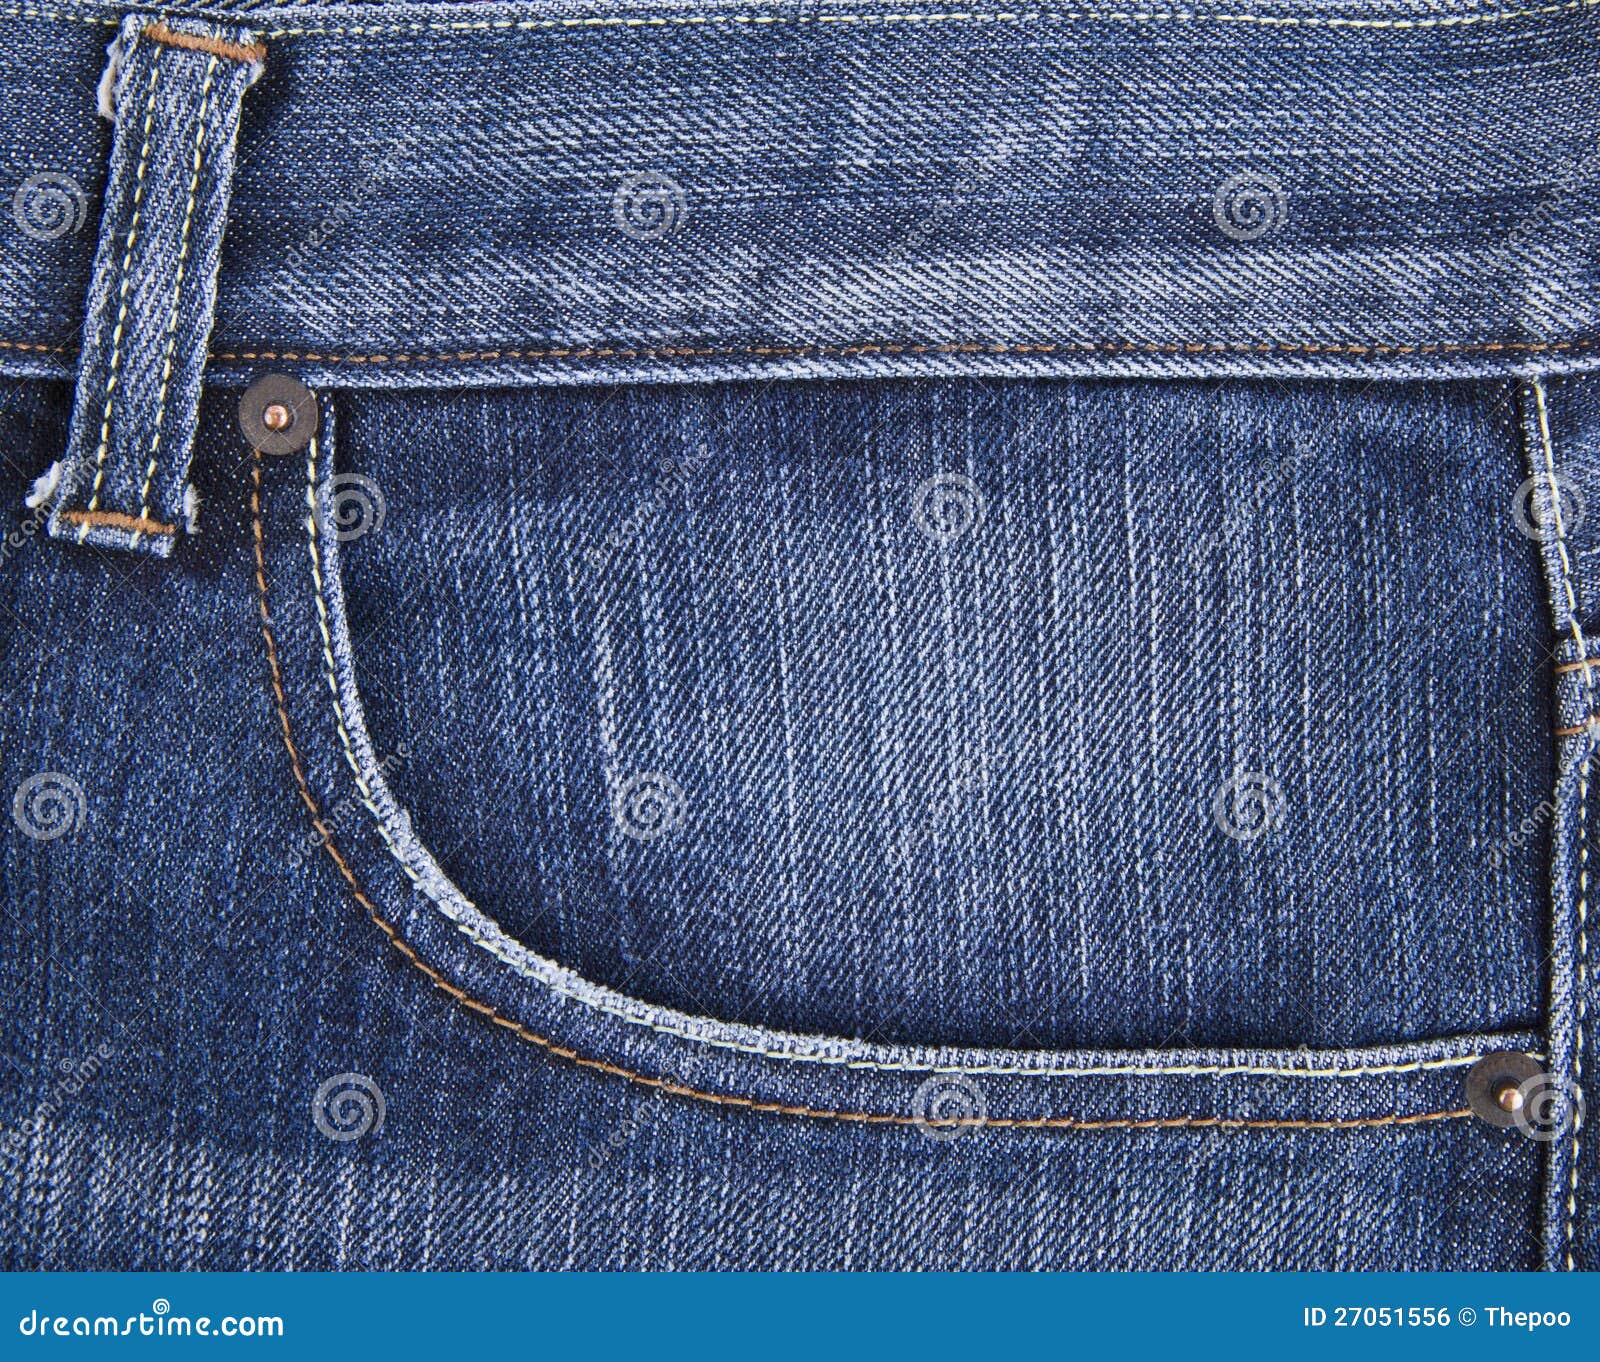 Denim jeans pocket stock photo. Image of design, decor - 27051556